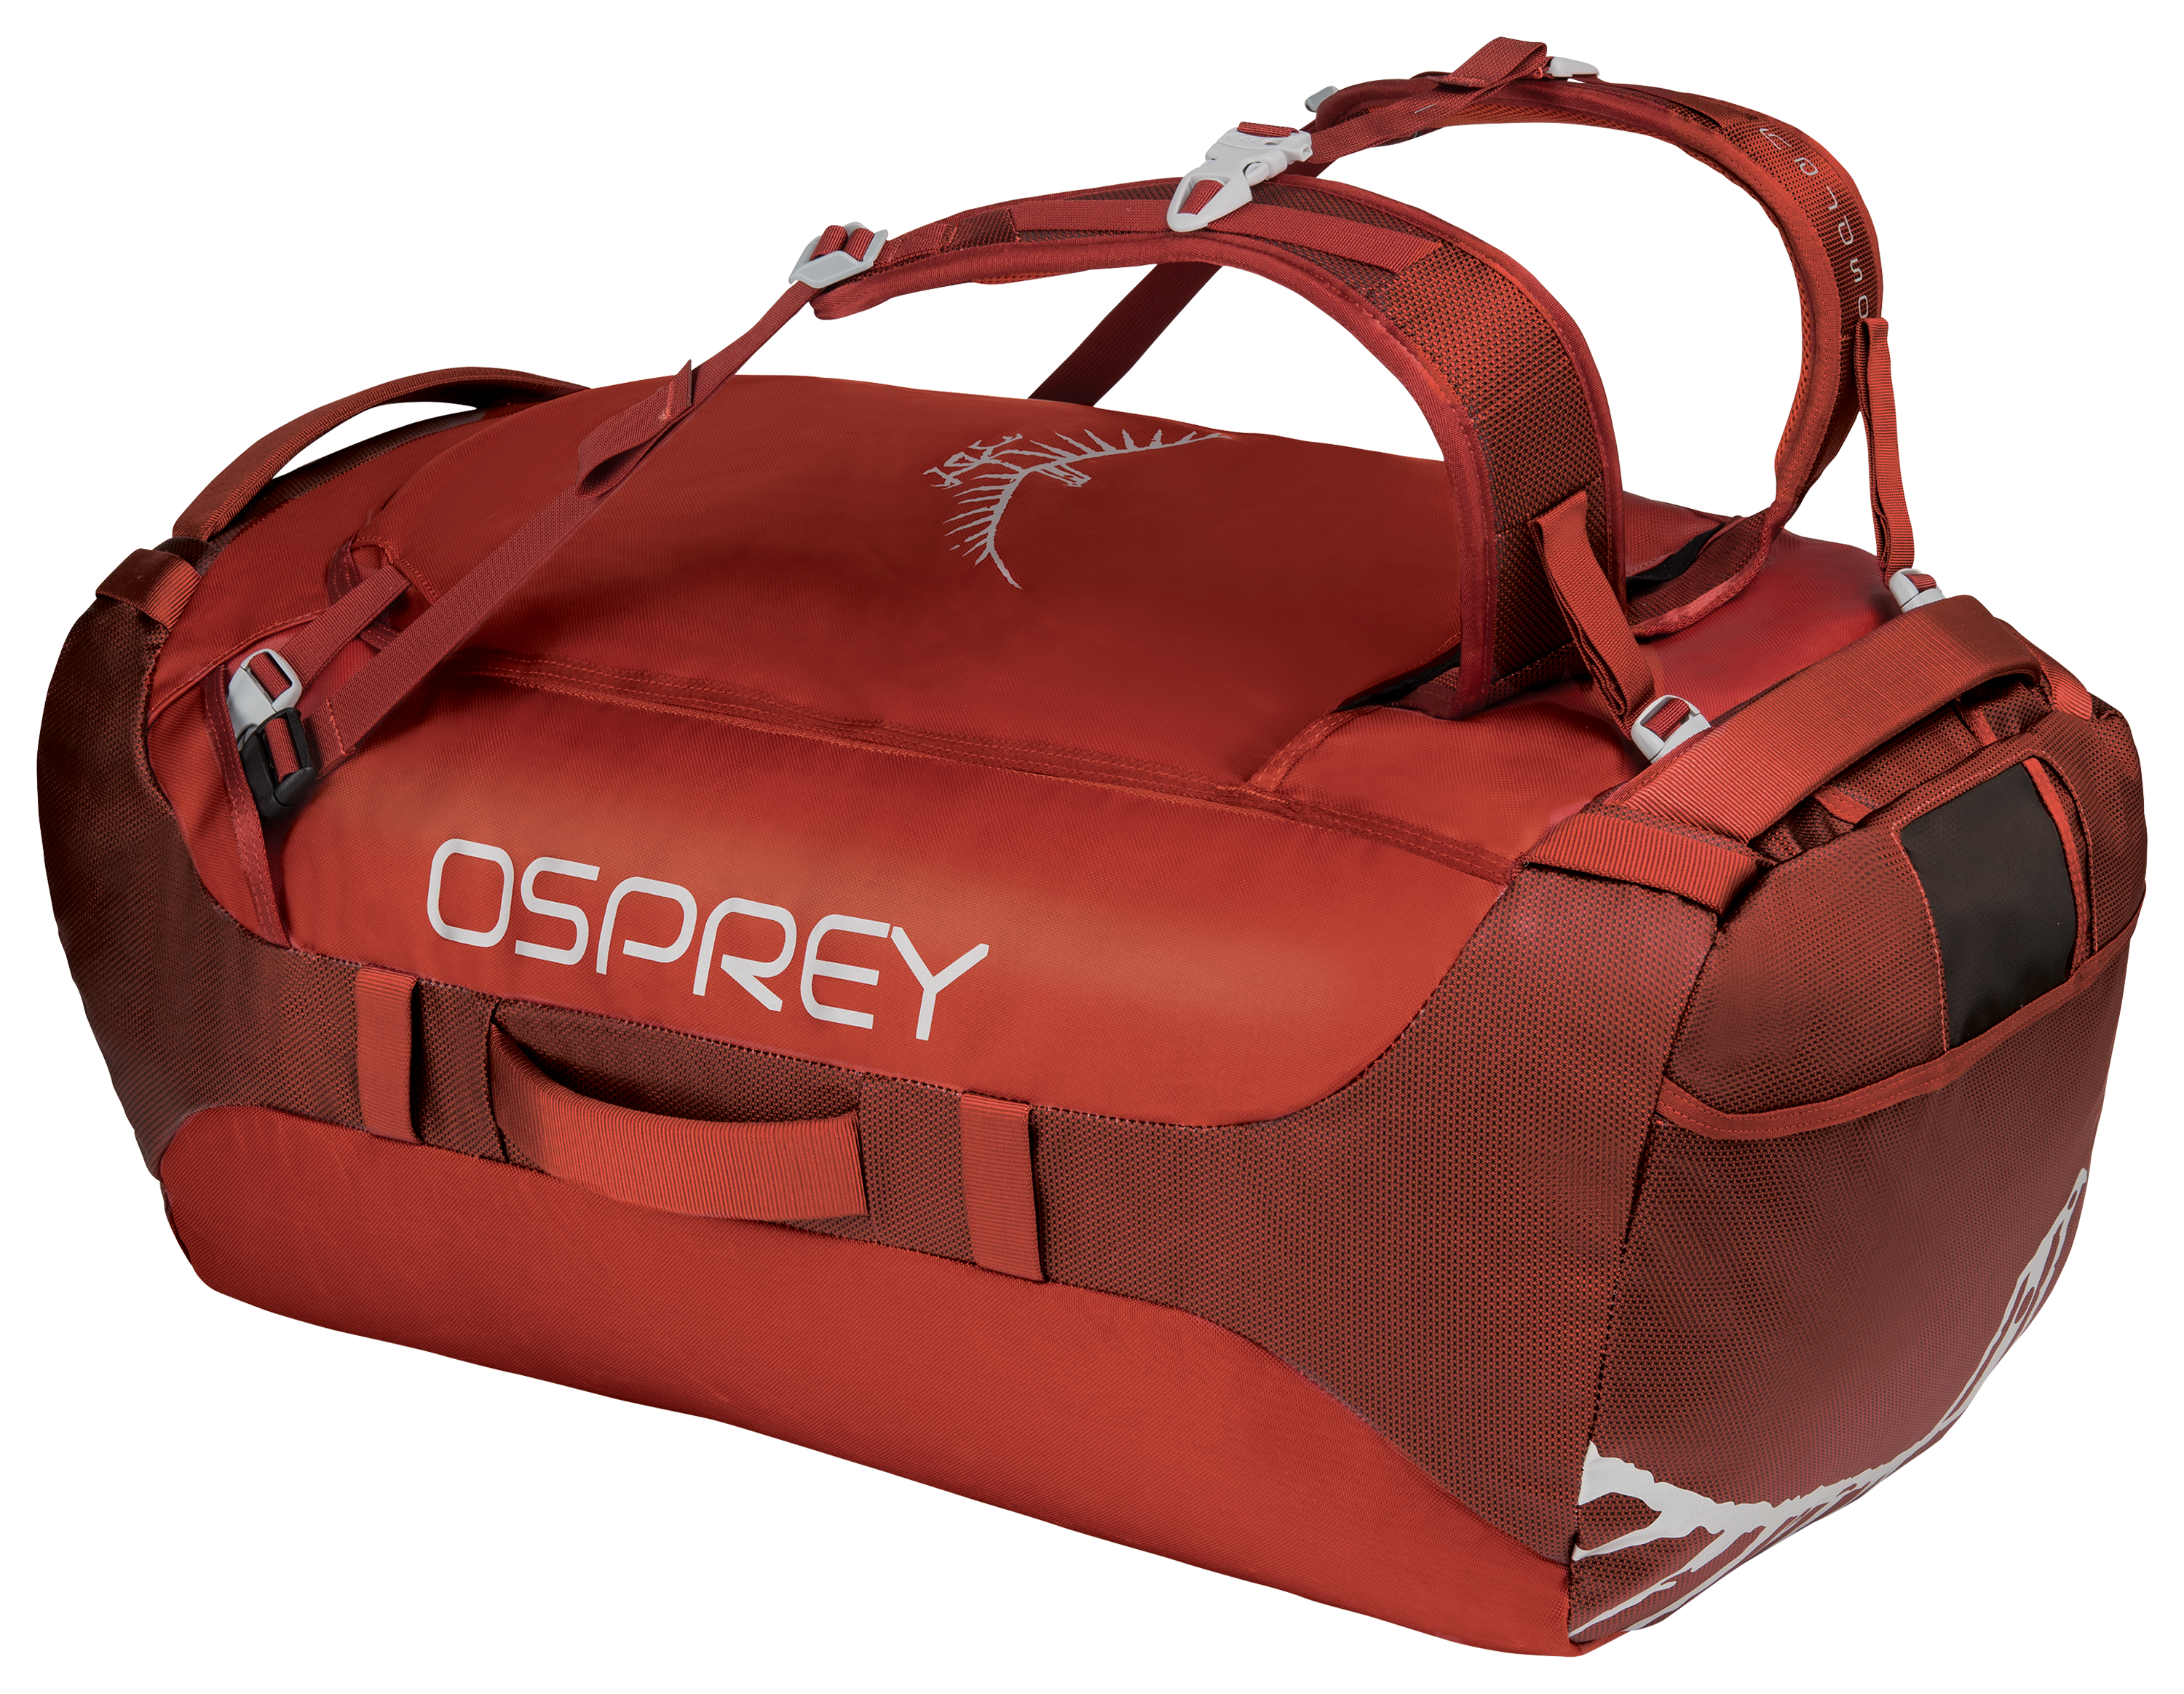 Osprey Transporter 95 Expedition Duffel Bag - Ruffian Red